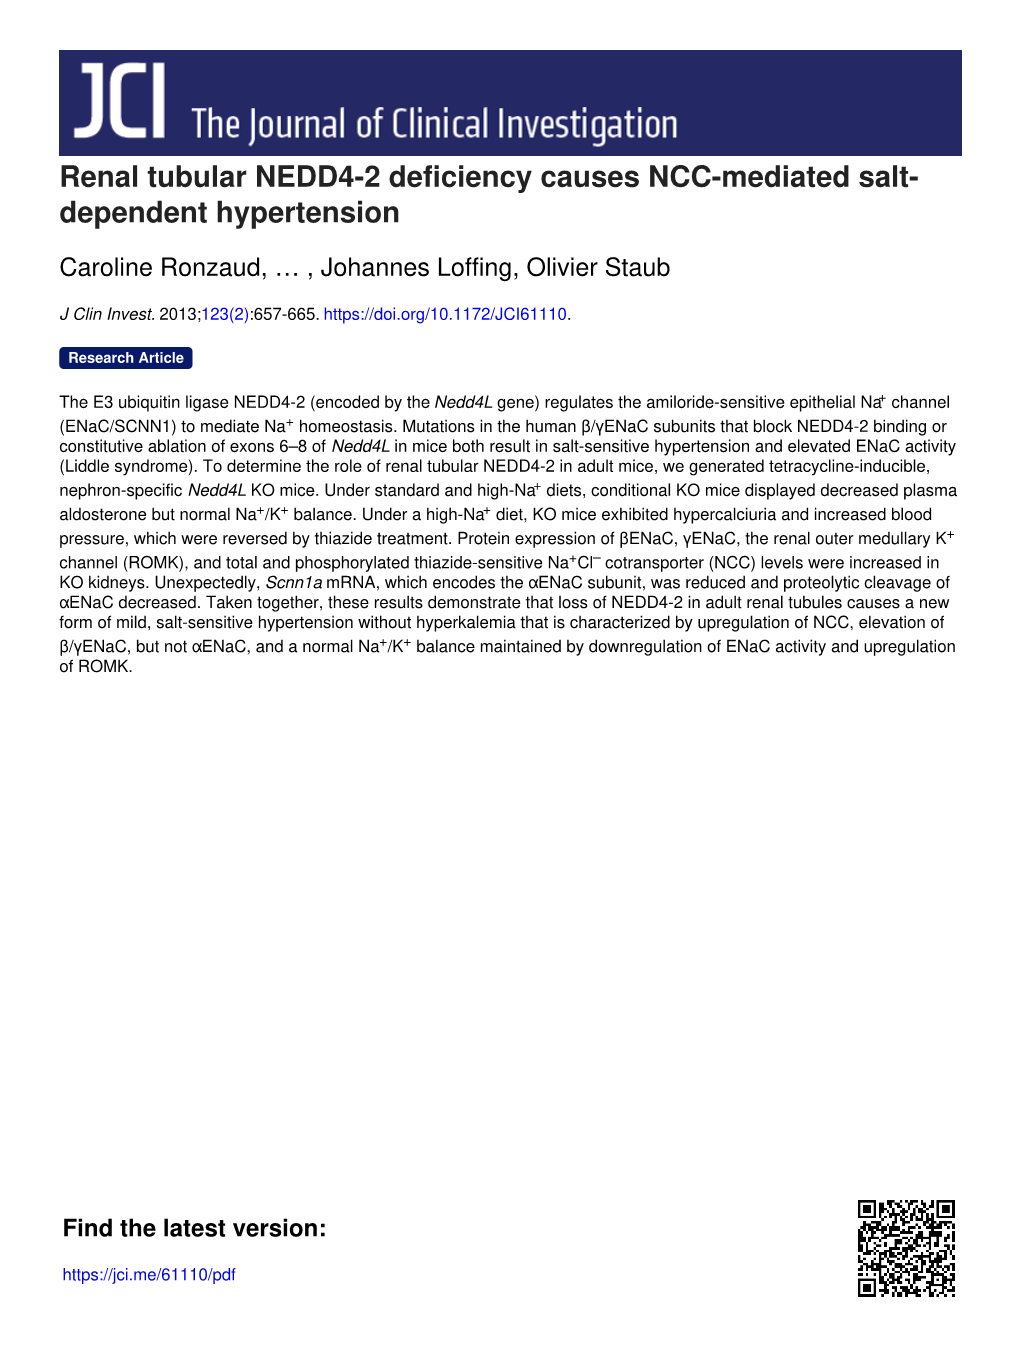 Renal Tubular NEDD4-2 Deficiency Causes NCC-Mediated Salt- Dependent Hypertension